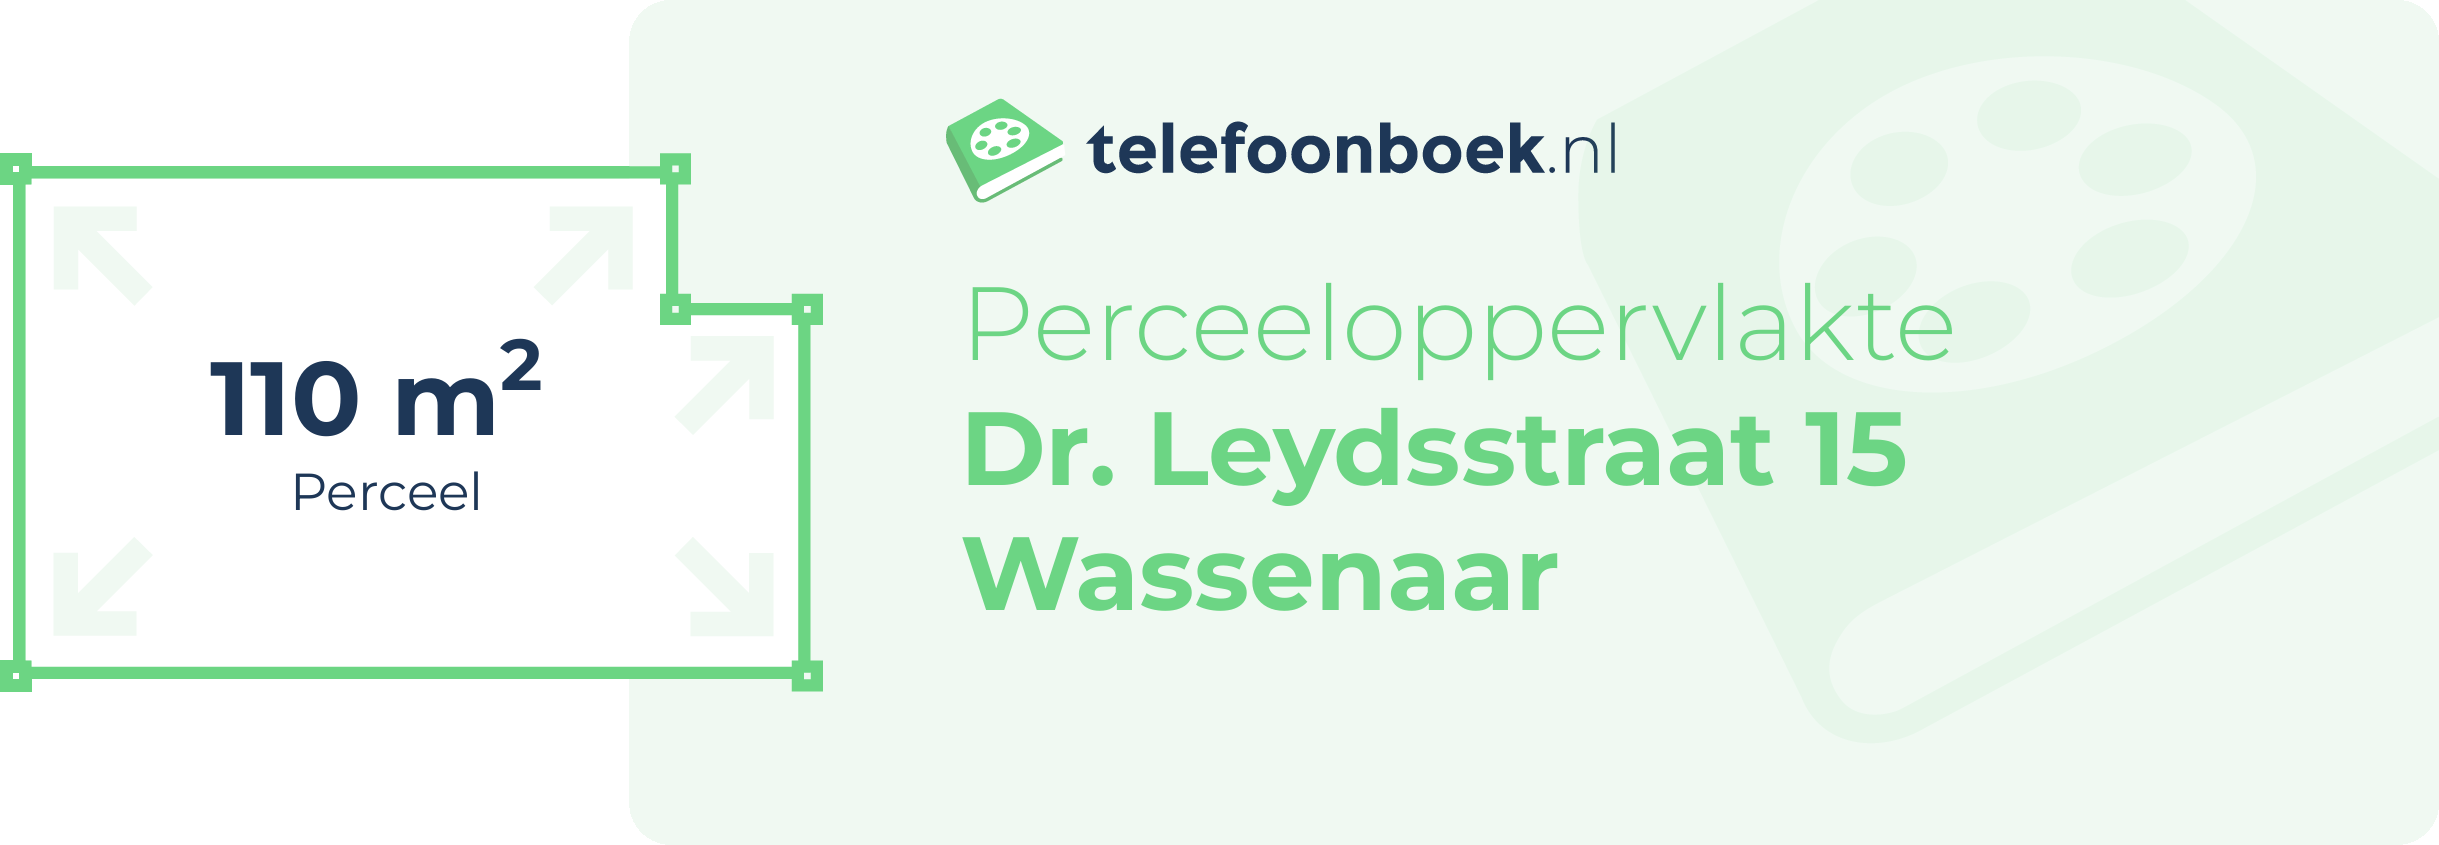 Perceeloppervlakte Dr. Leydsstraat 15 Wassenaar